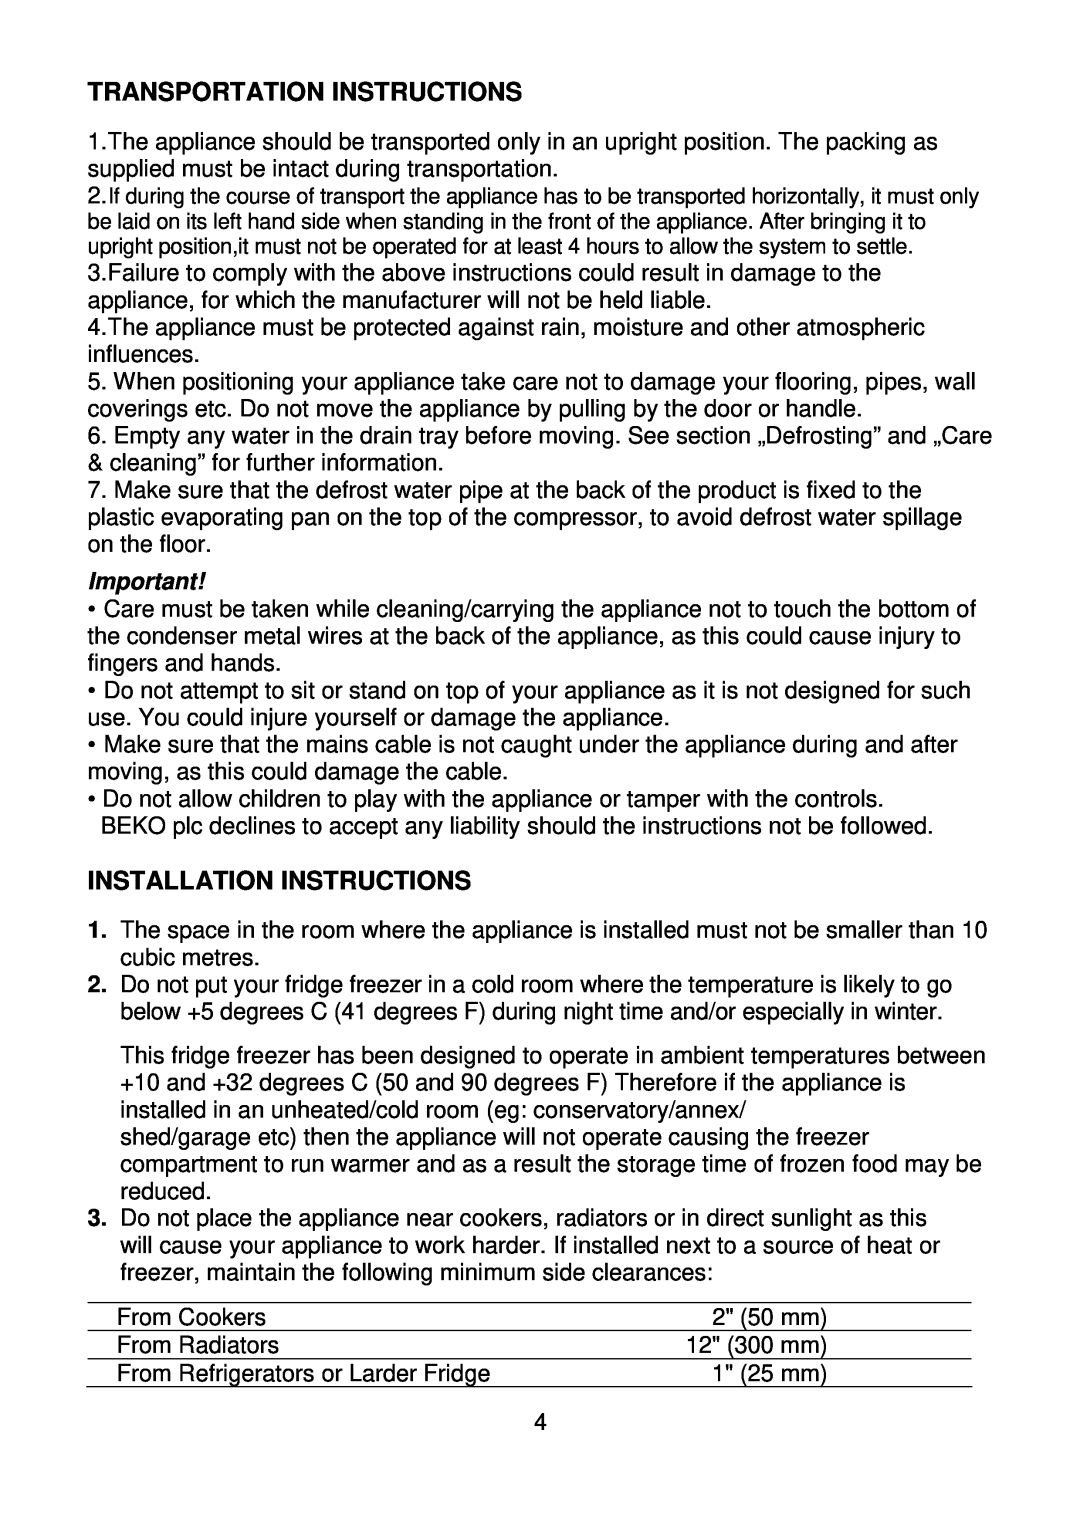 Beko CDA671F installation instructions Transportation Instructions, Installation Instructions 